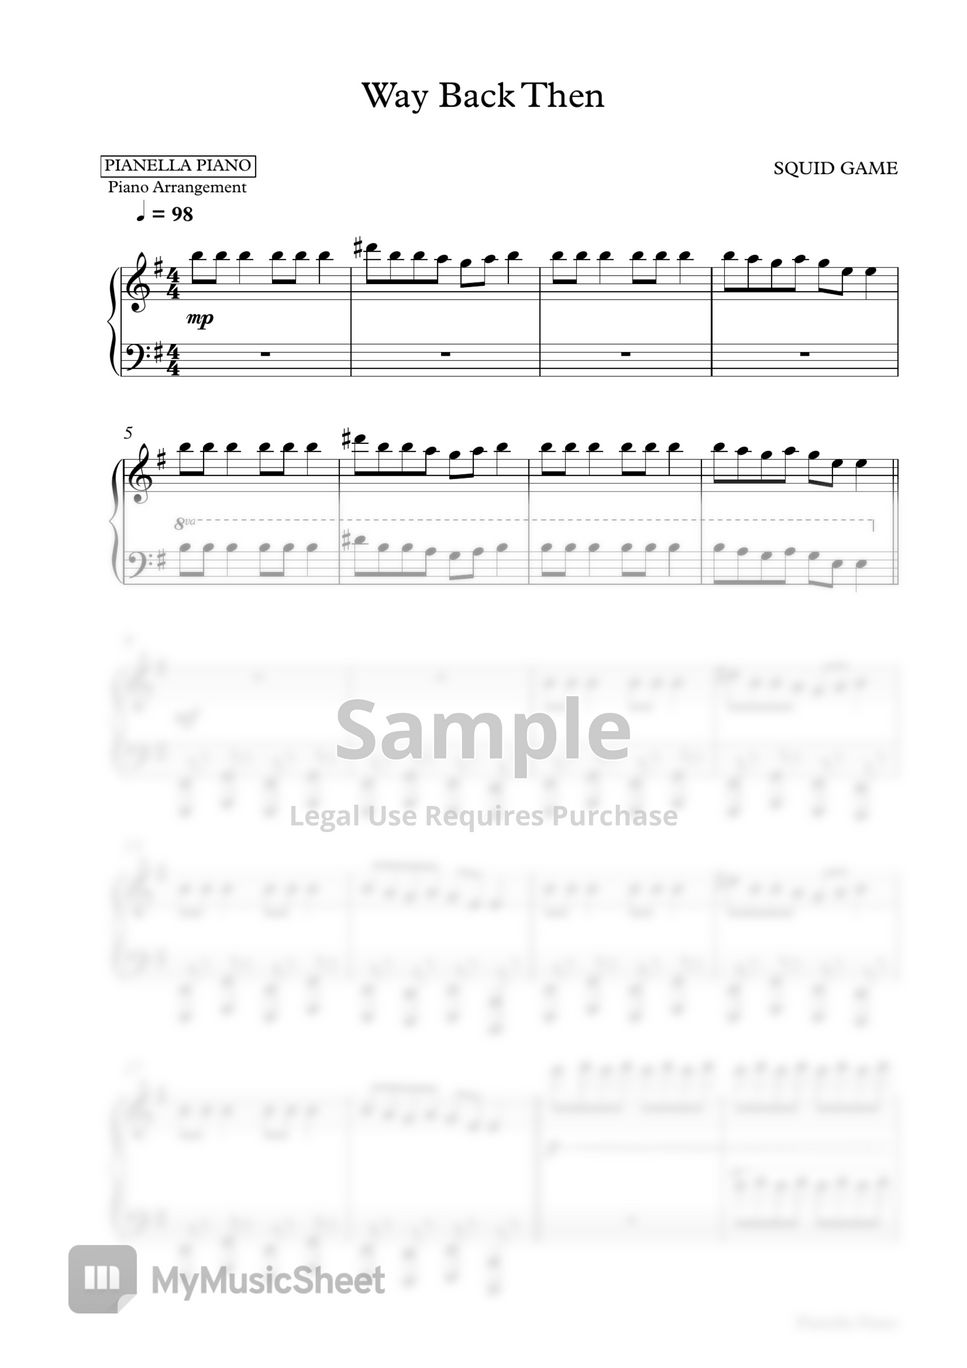 SQUID GAME - WAY BACK THEN (Piano Sheet) by Pianella Piano